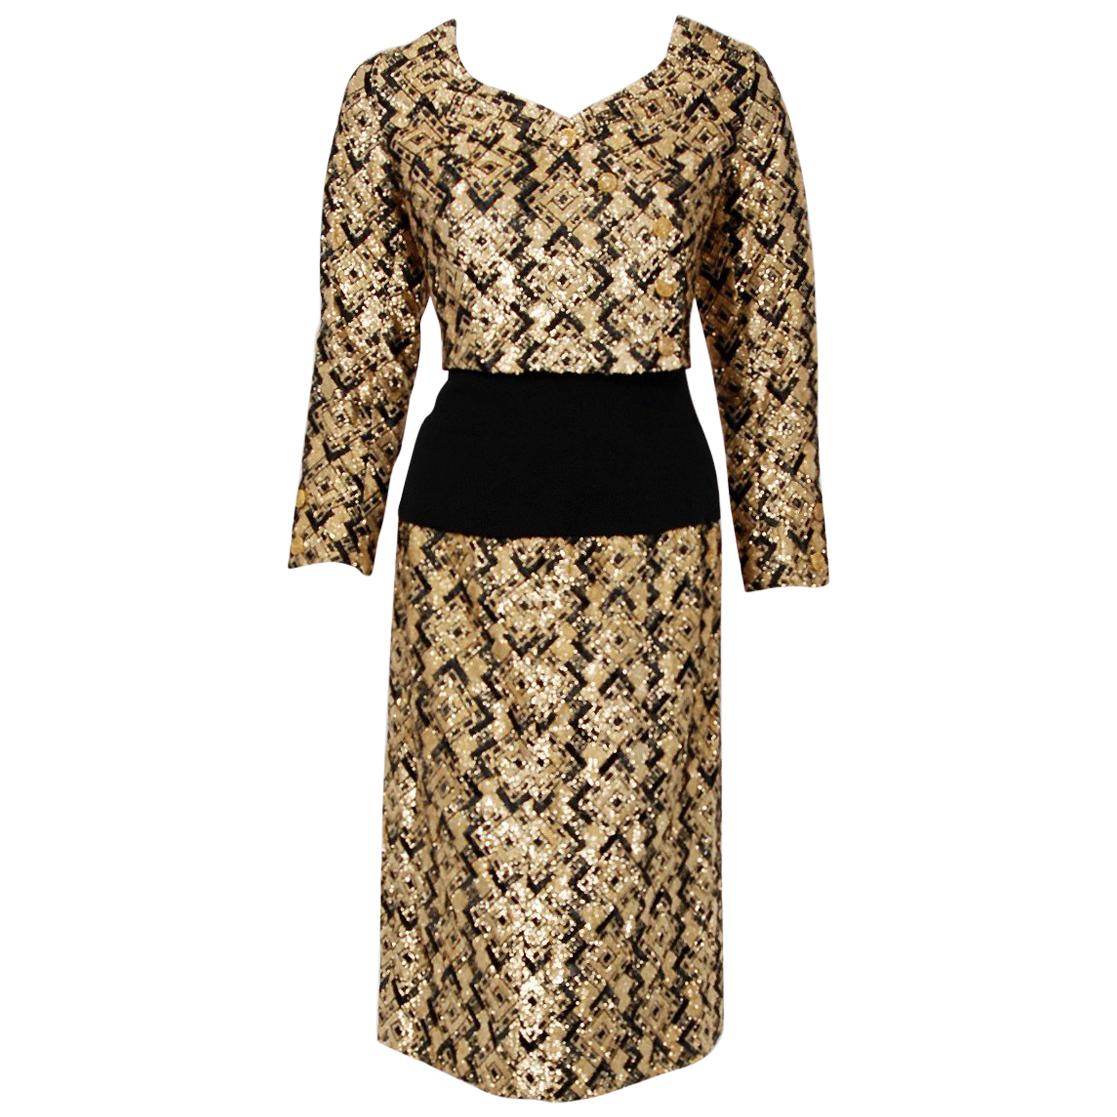 1970 Chanel Haute-Couture Metallic Gold & Black Deco Graphic Silk Dress Ensemble